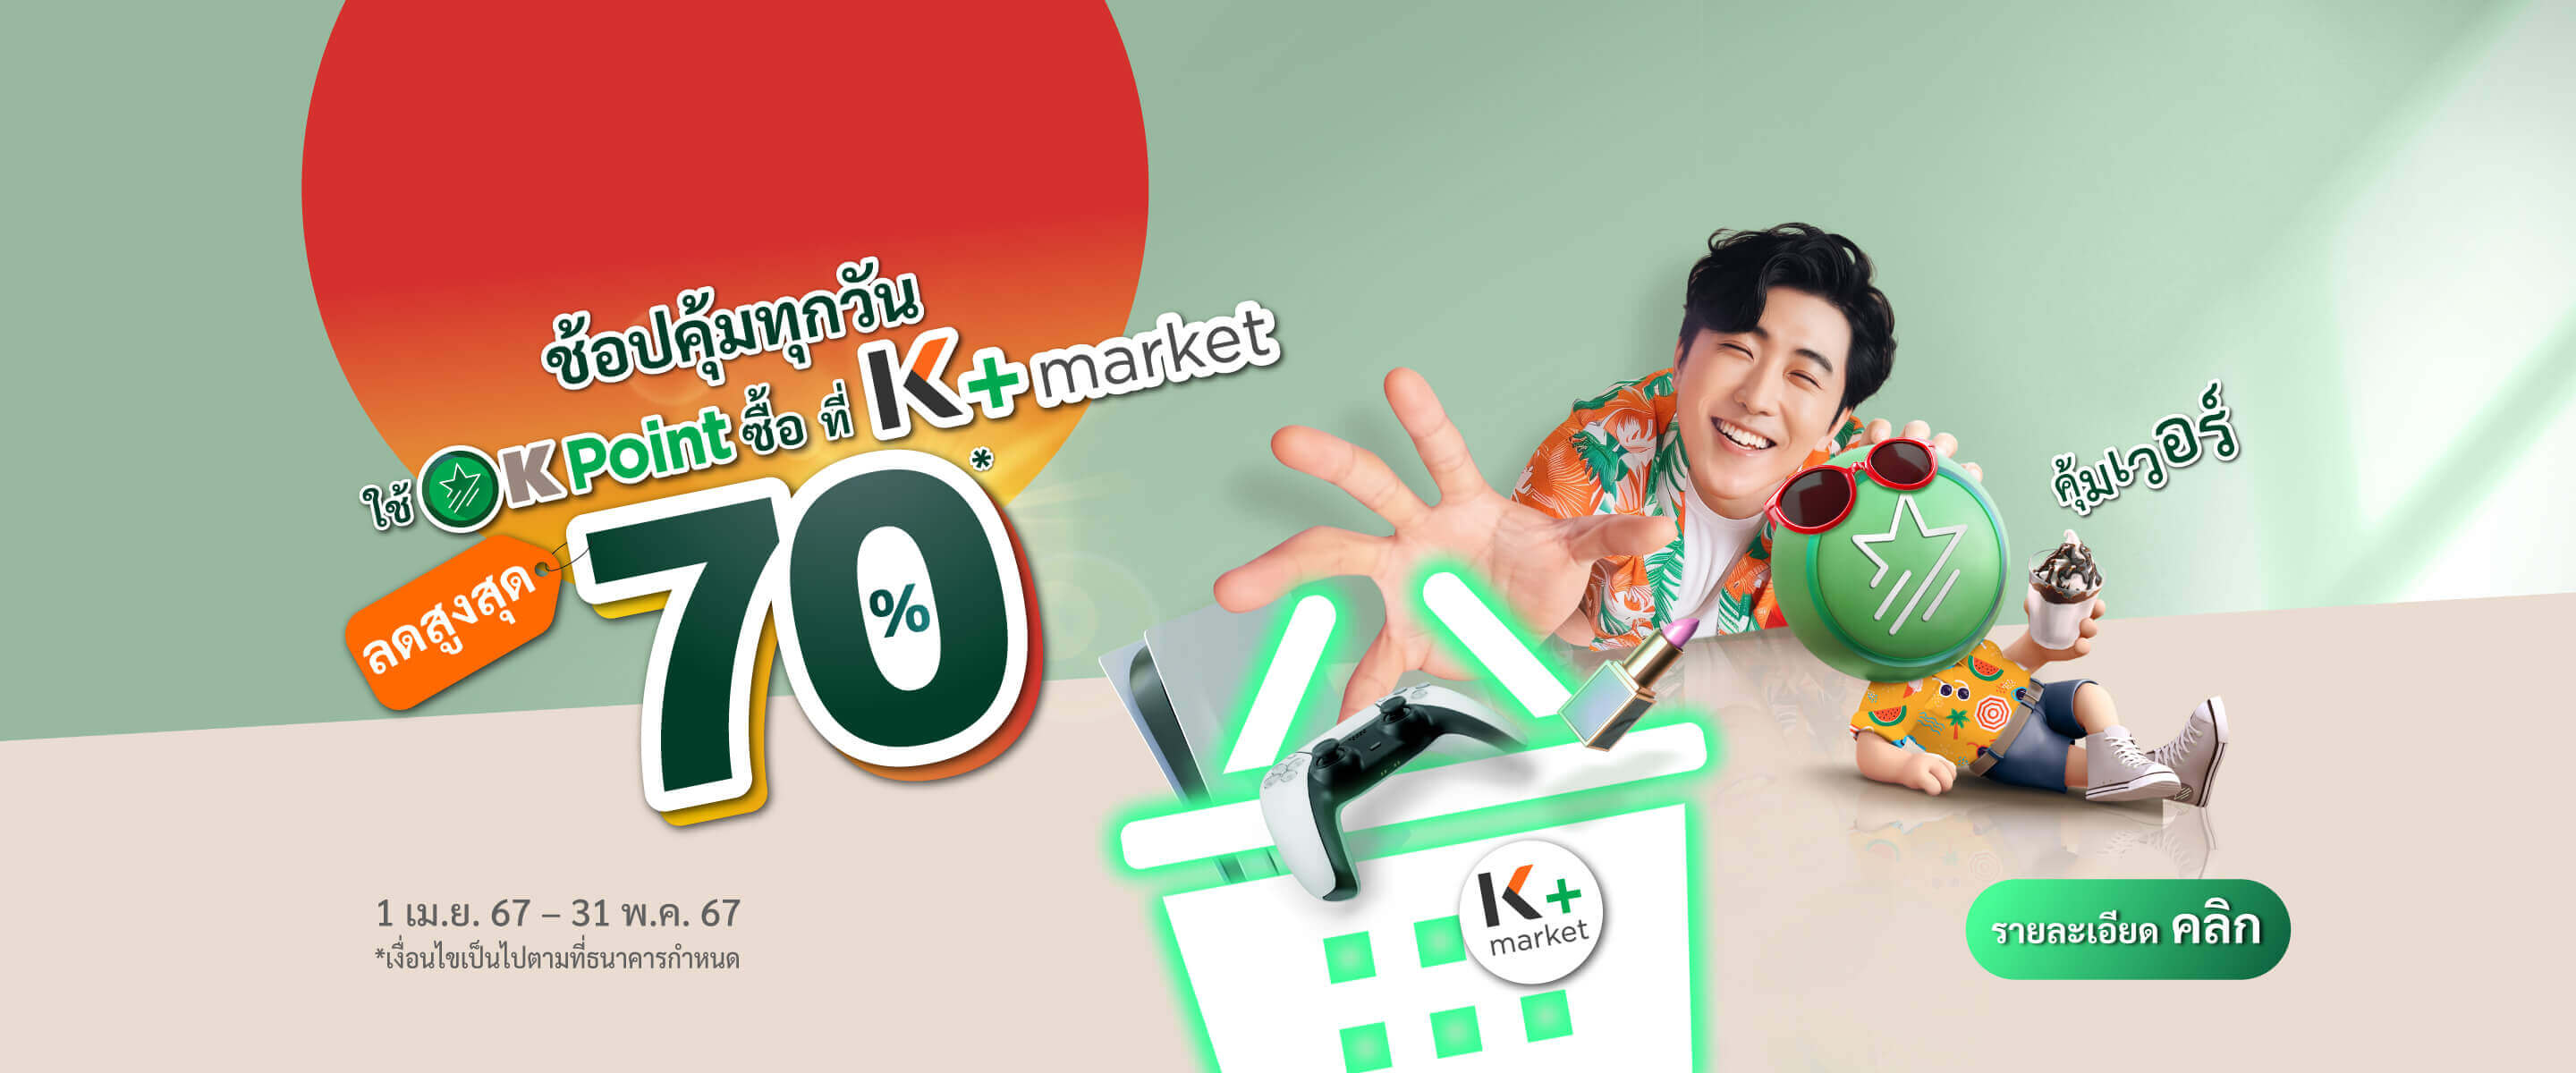 K Point  (K+ market )